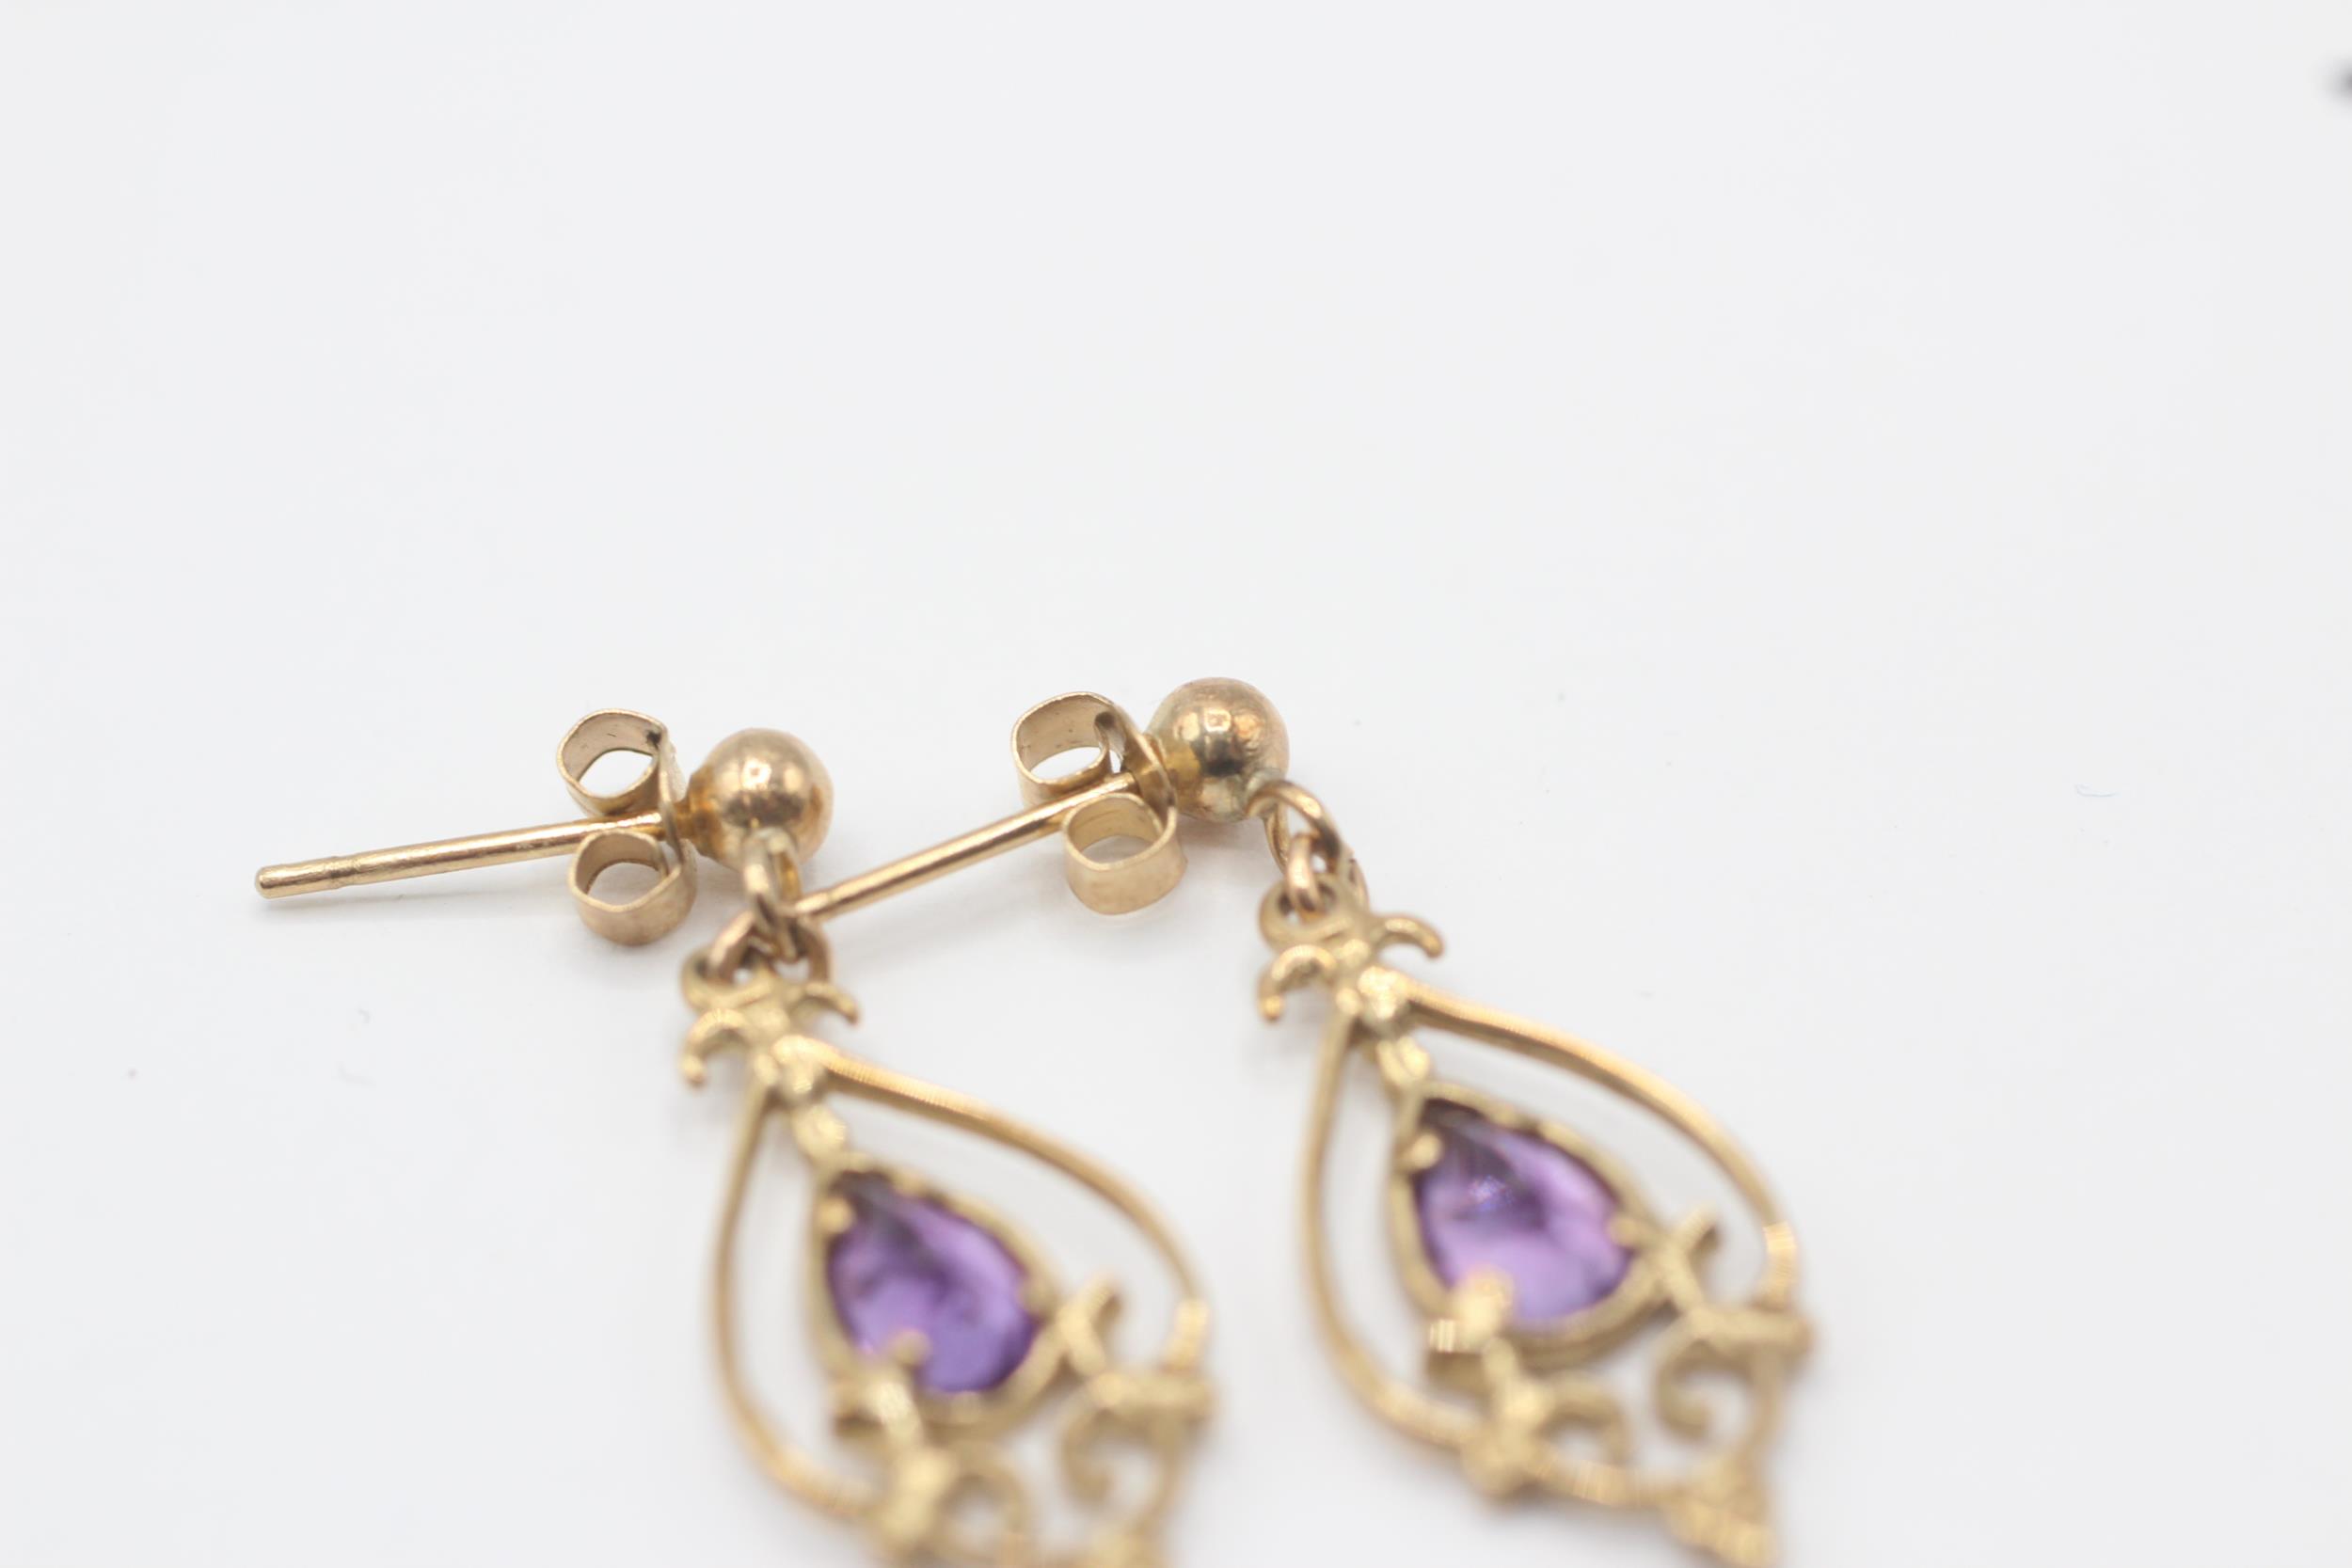 9ct gold amethyst ornate drop earrings 1.5 g - Image 4 of 4